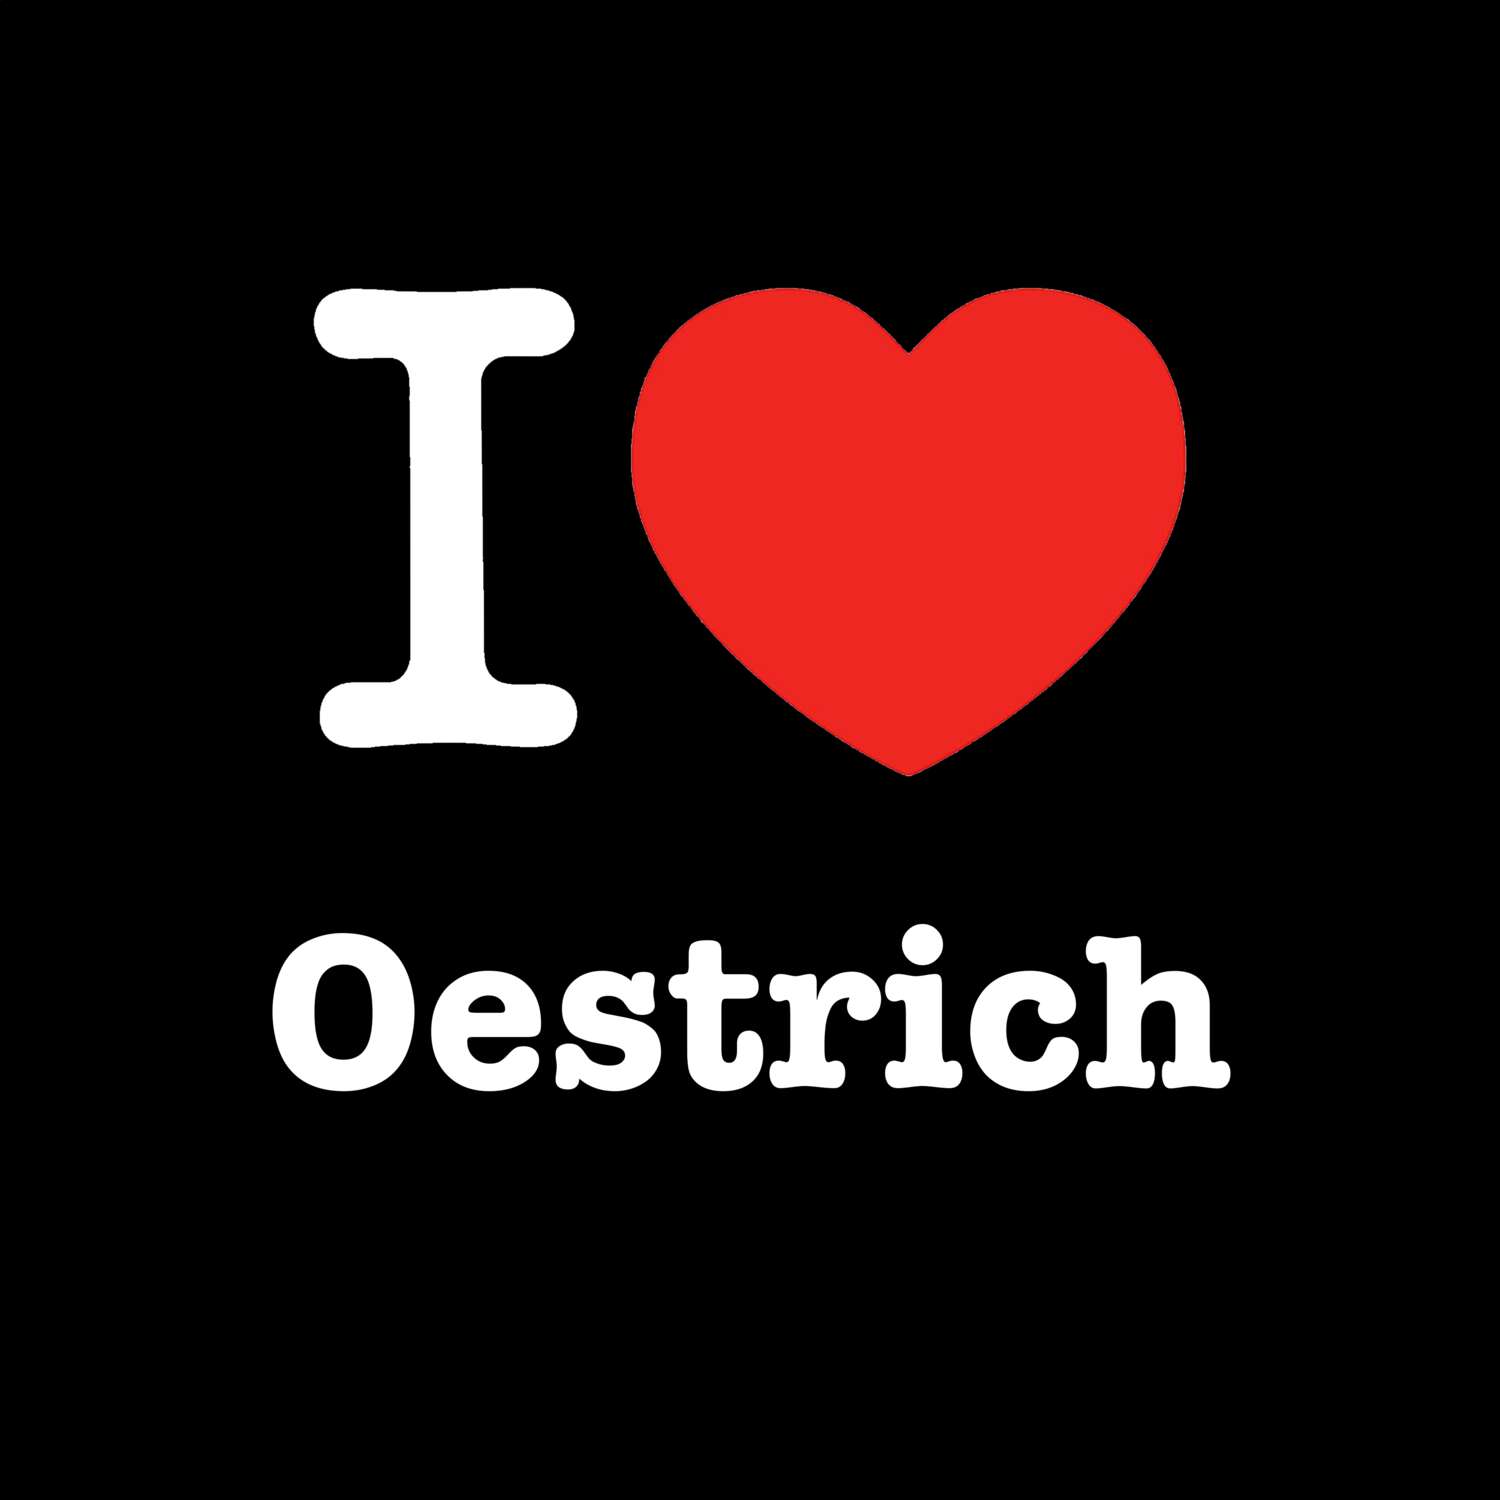 Oestrich T-Shirt »I love«